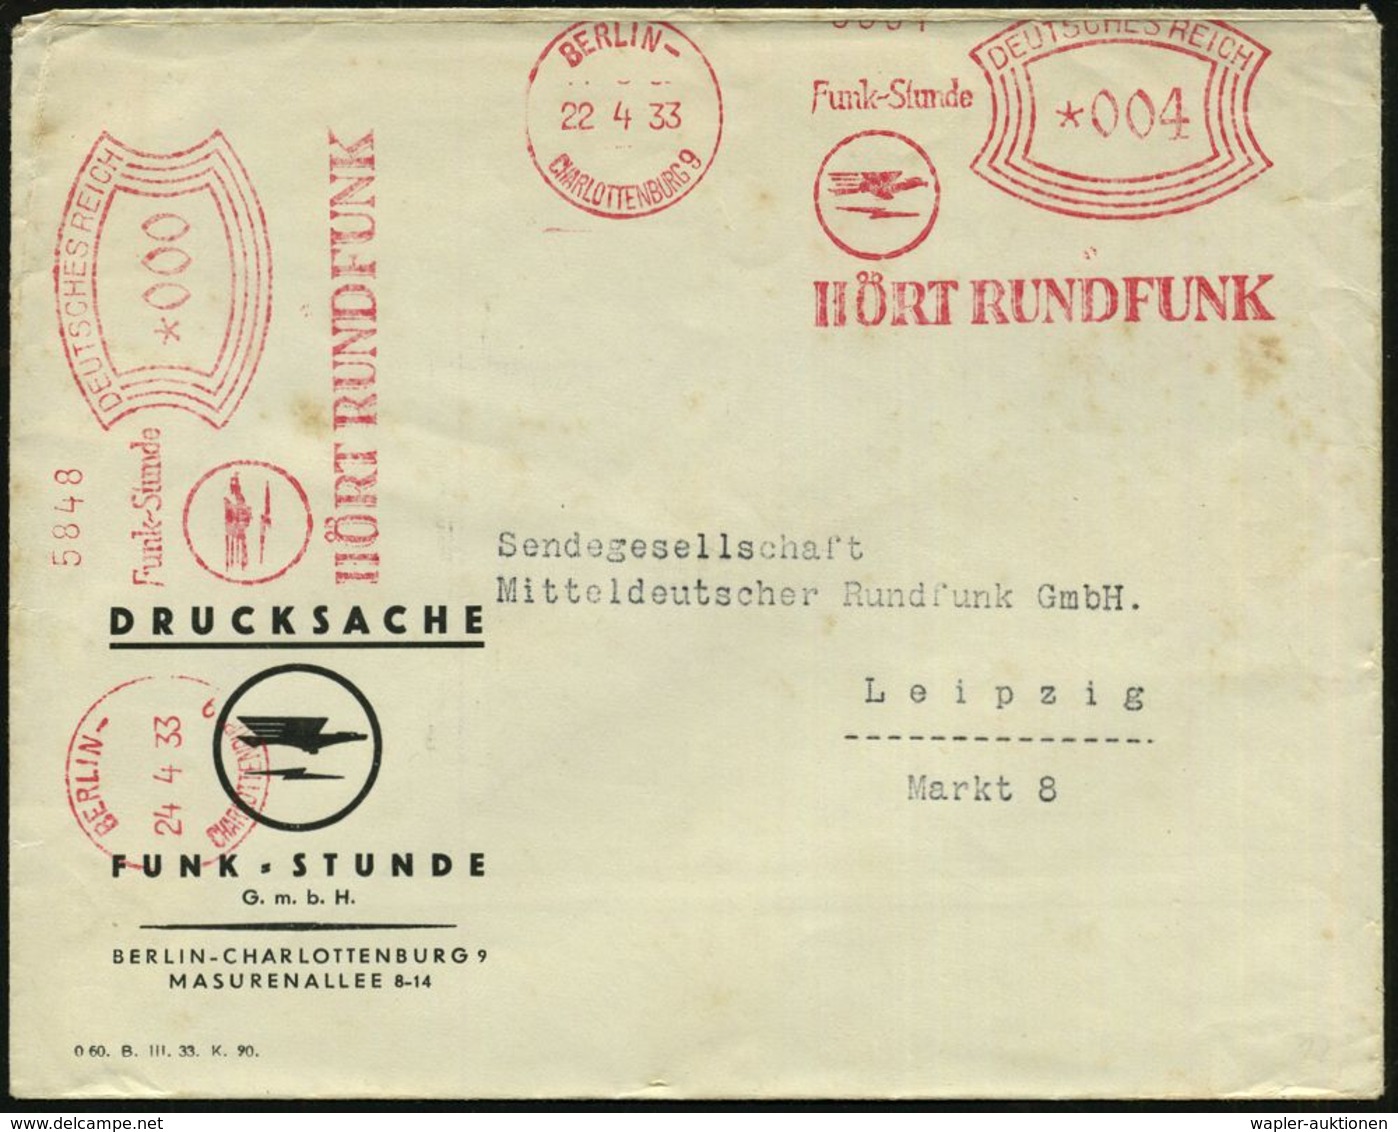 BERLIN-/ CHARLOTTENBURG9/ Funk-Stunde/ HÖRT RUNDFUNK 1933 (22.5.) AFS 004 Pf. + 000 = Sender-Logo, 2 Abdrucke (Adler, Bl - Non Classés